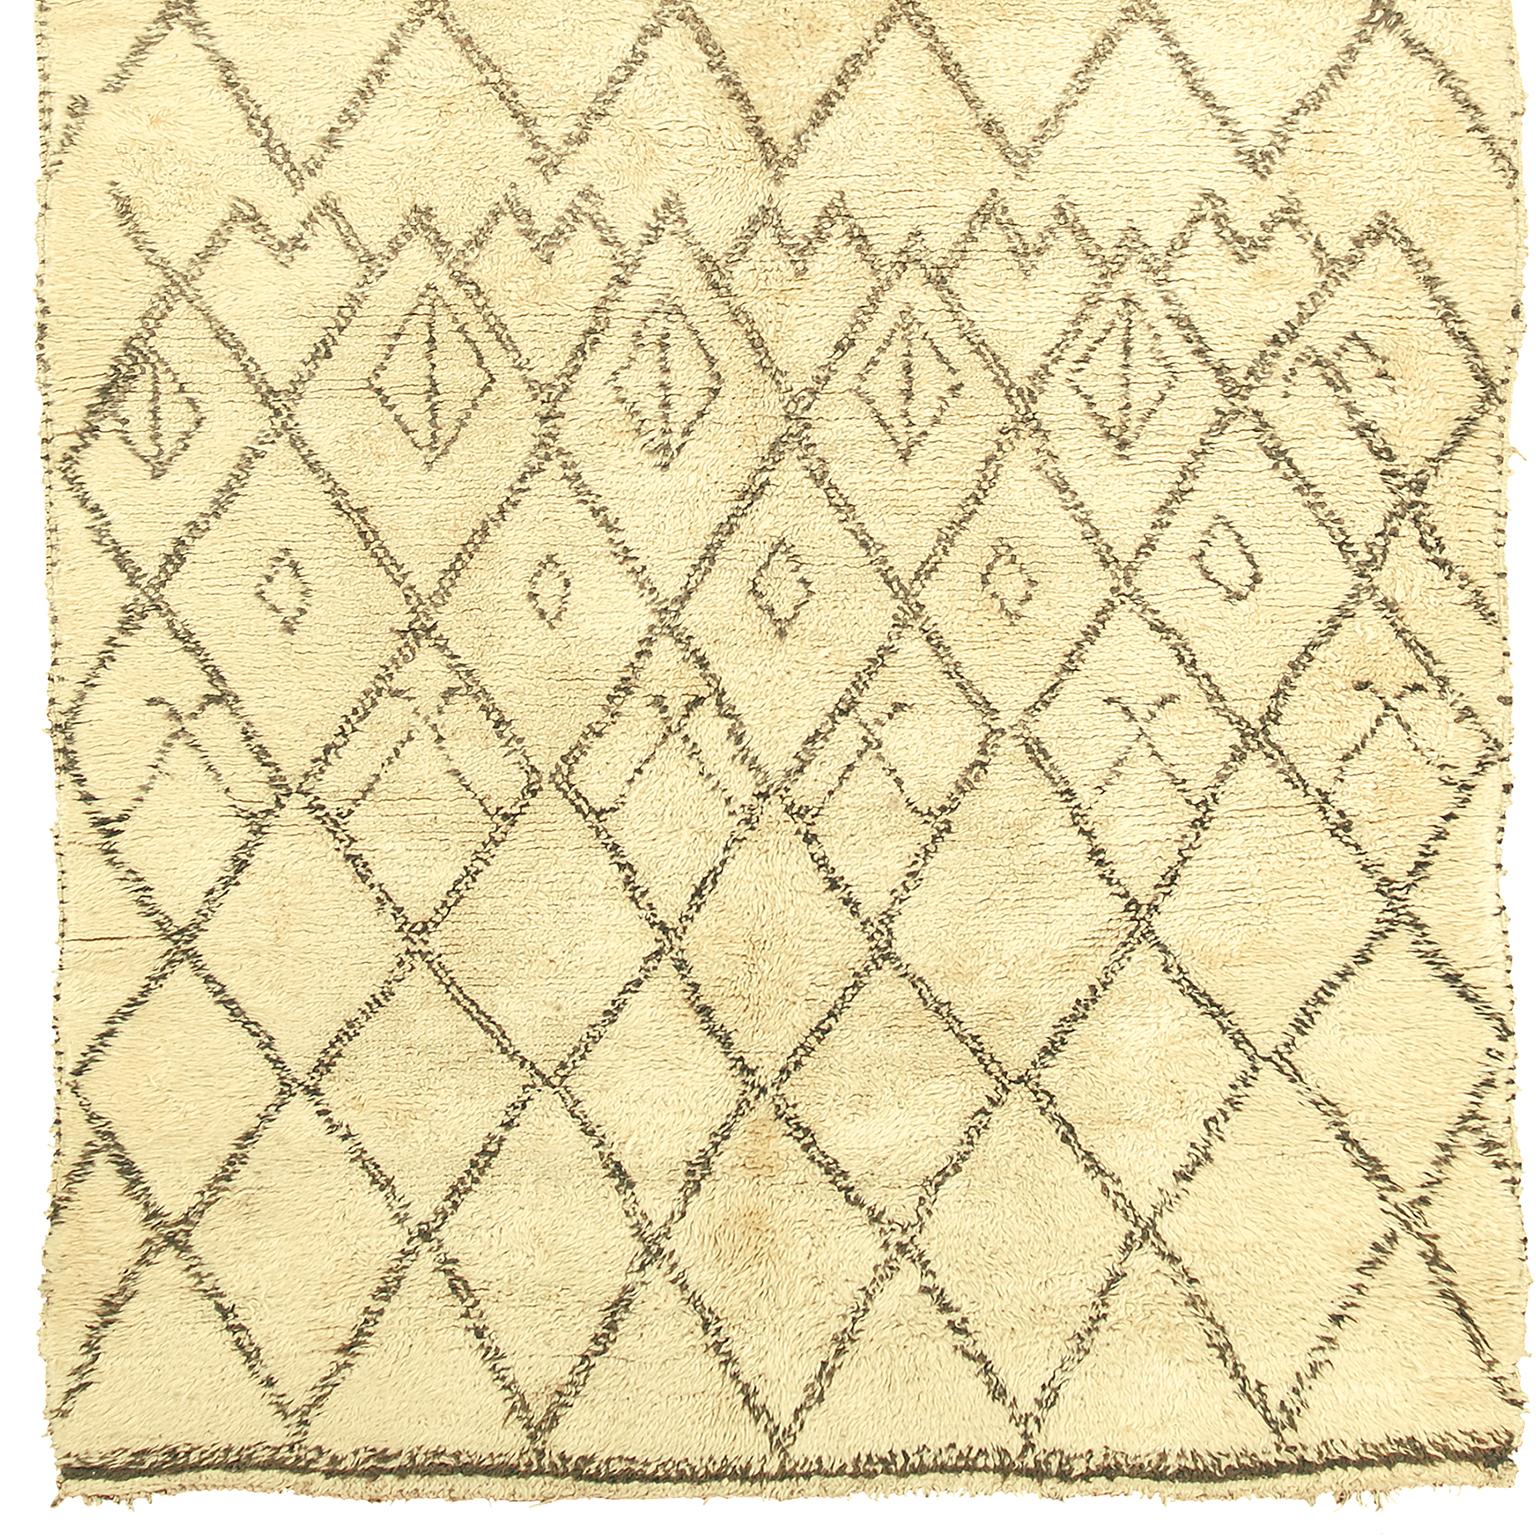 Mid-20th century Moroccan Beni Ouarain carpet.
Handwoven.